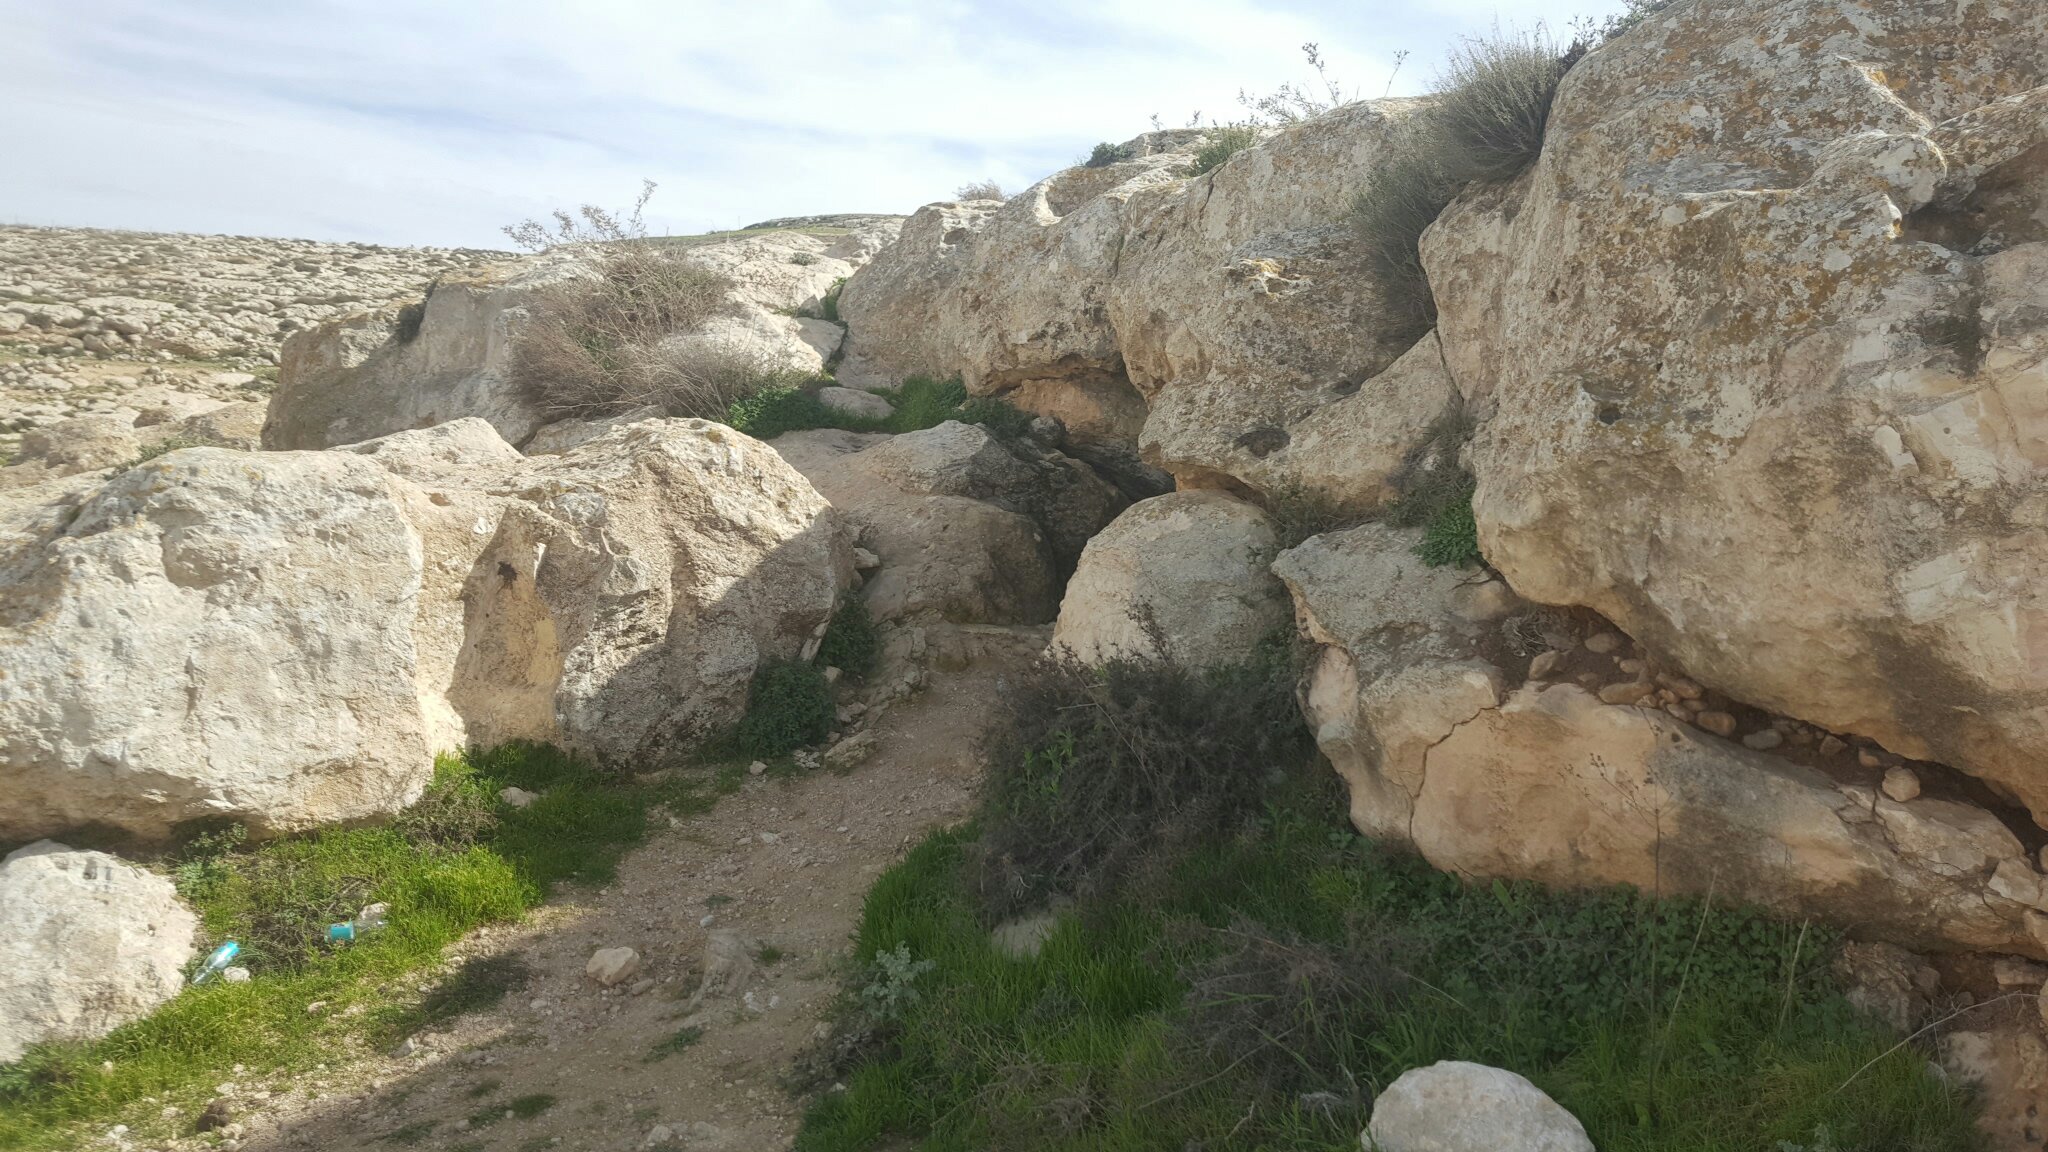 Hidden between the rocks - Avigail